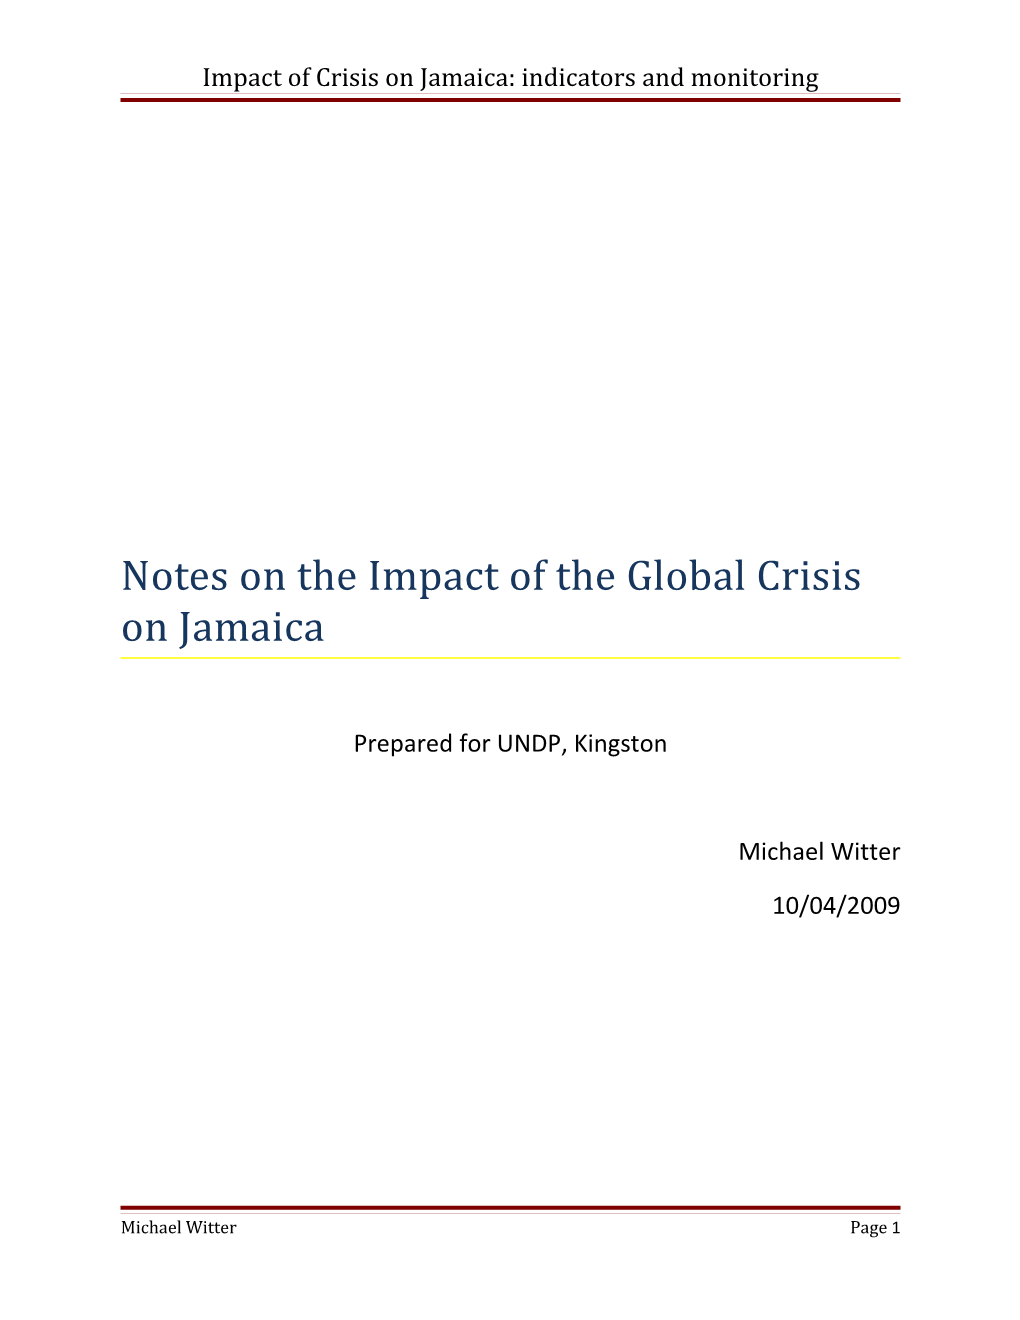 Impact of Crisis on Jamaica: Indicators and Monitoring